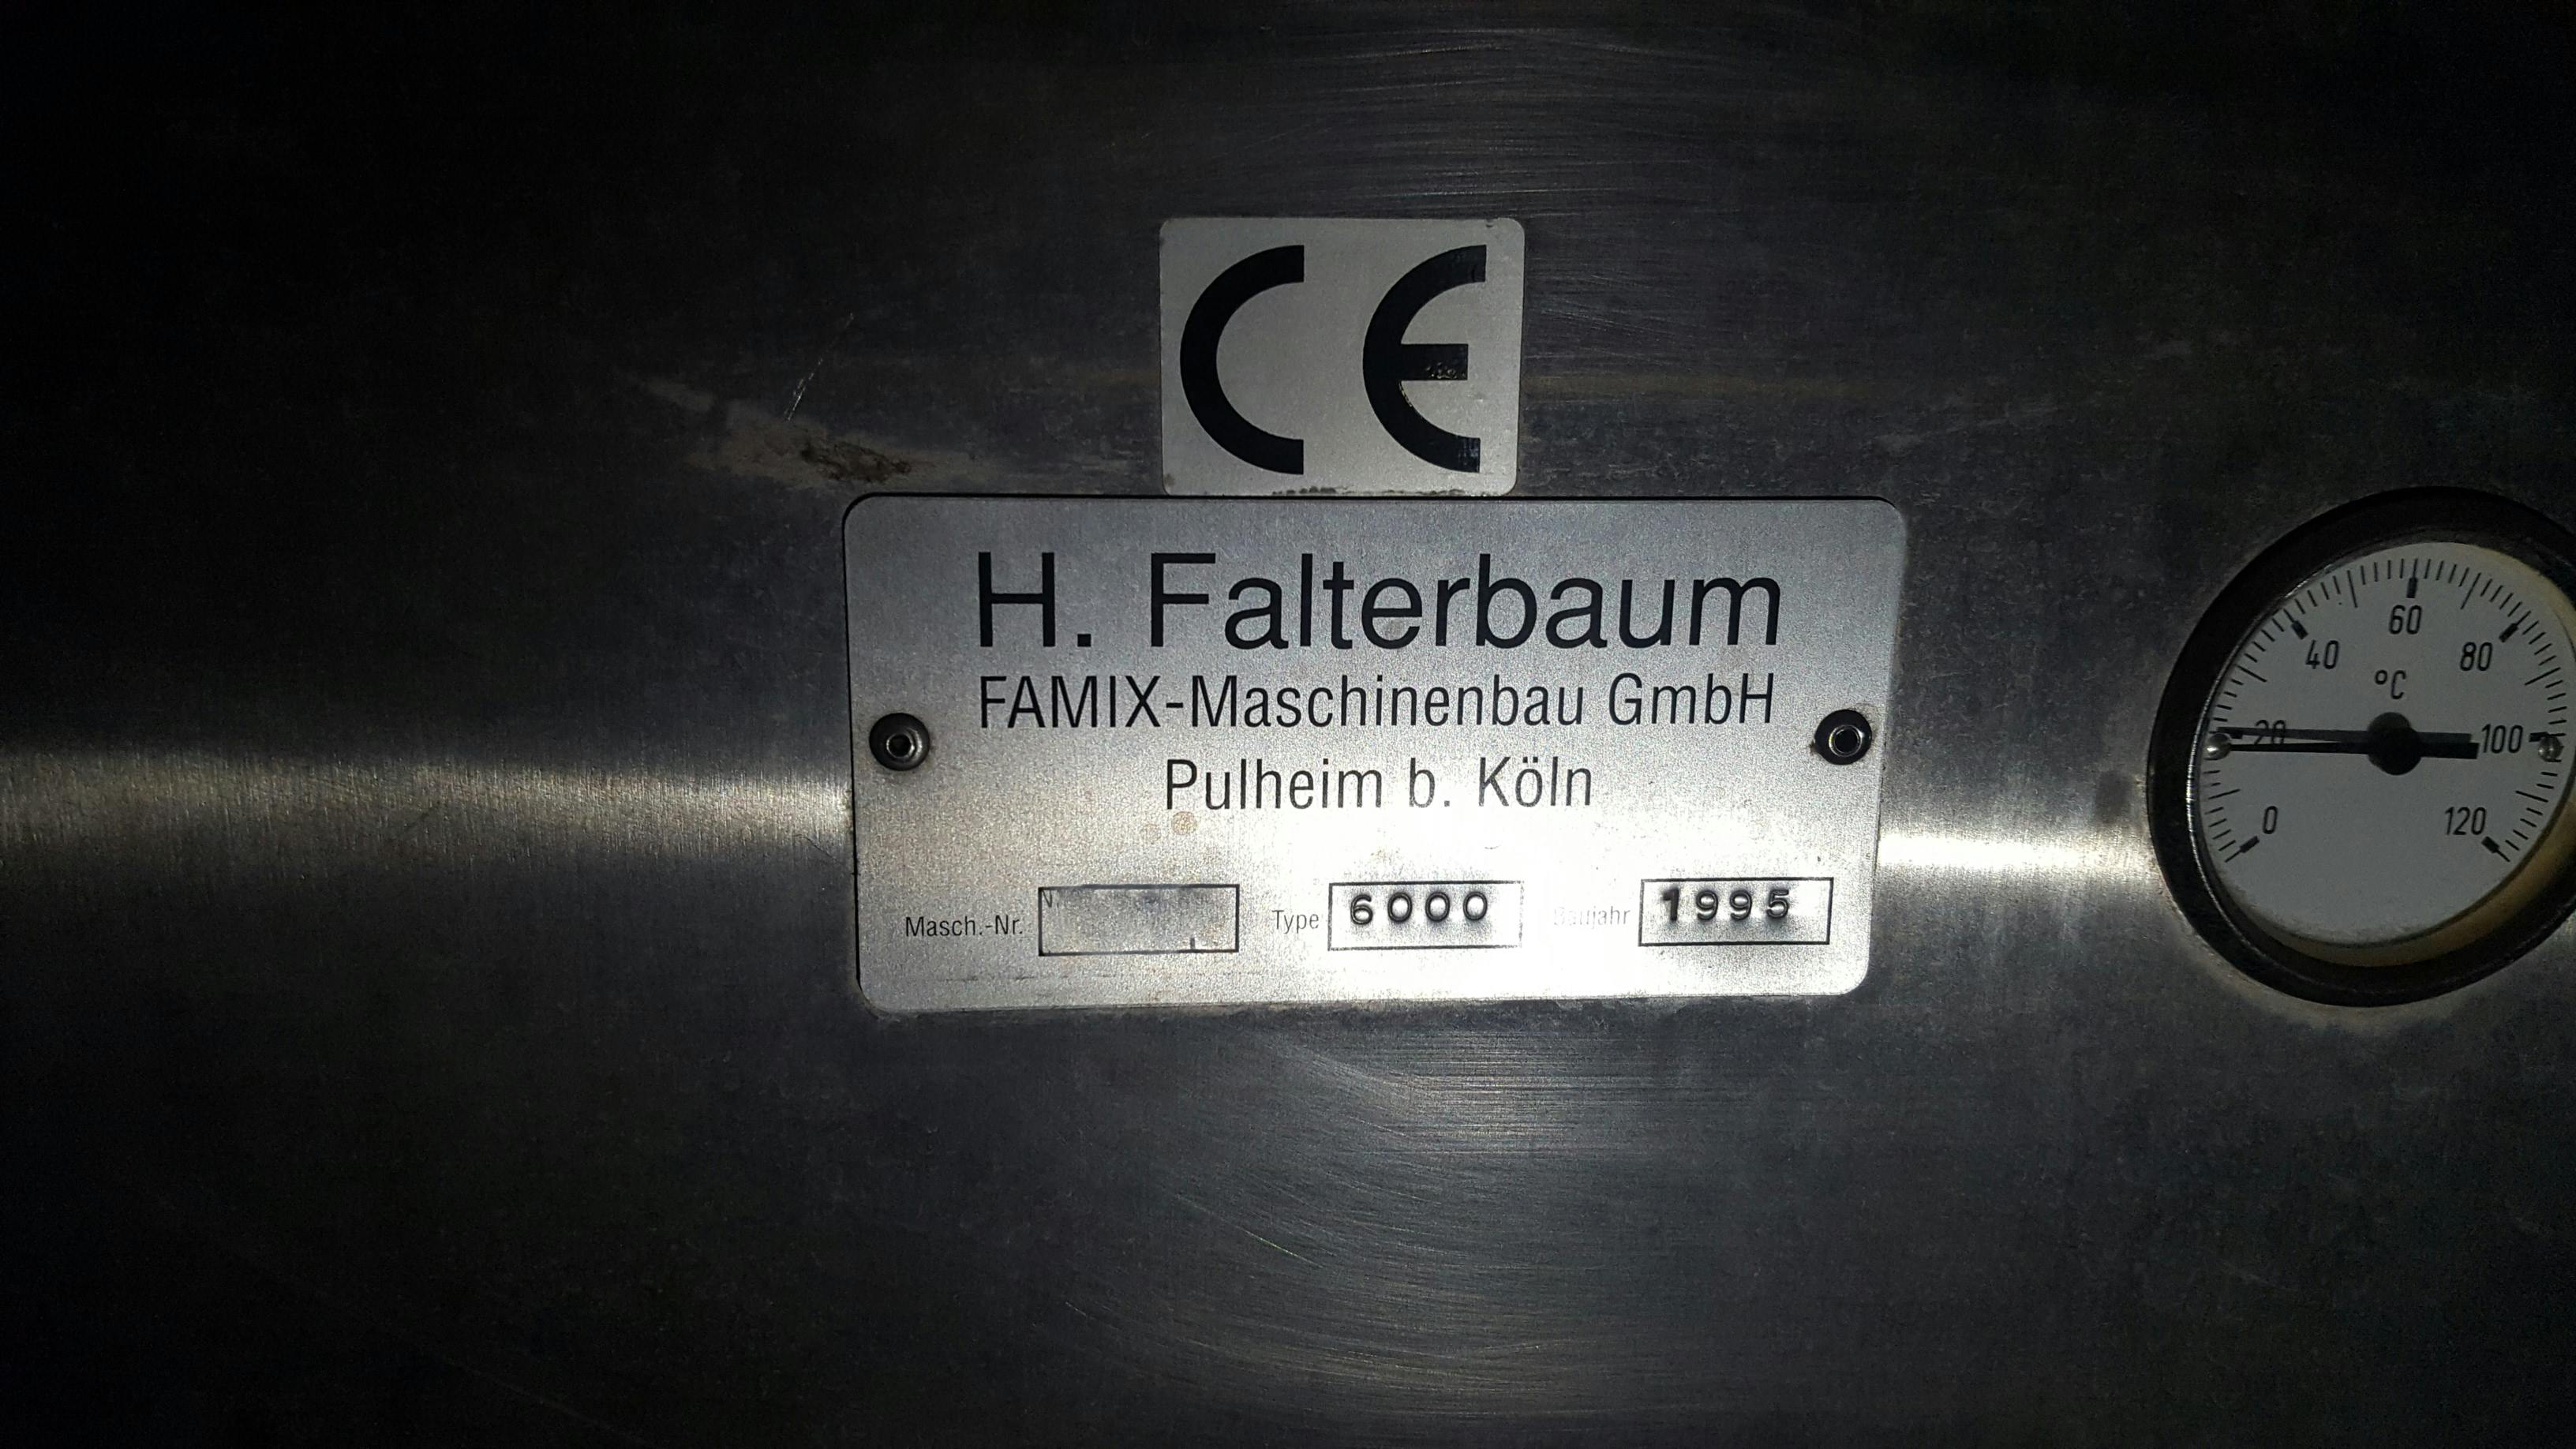 Nameplate of FAMIX Famix 6000